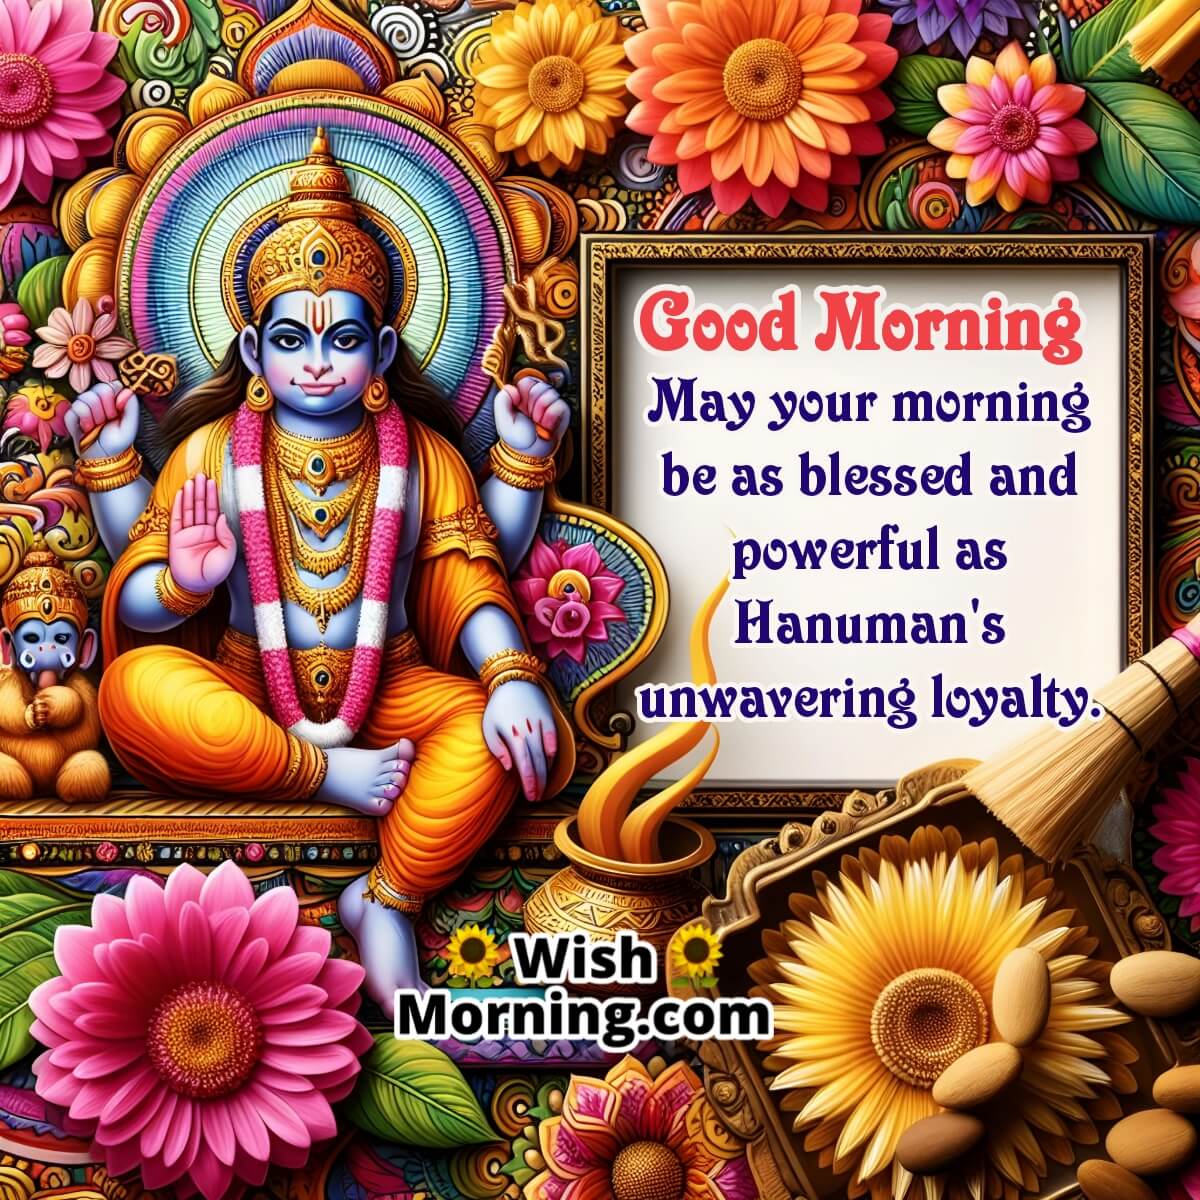 Good Morning Hanuman Blessings